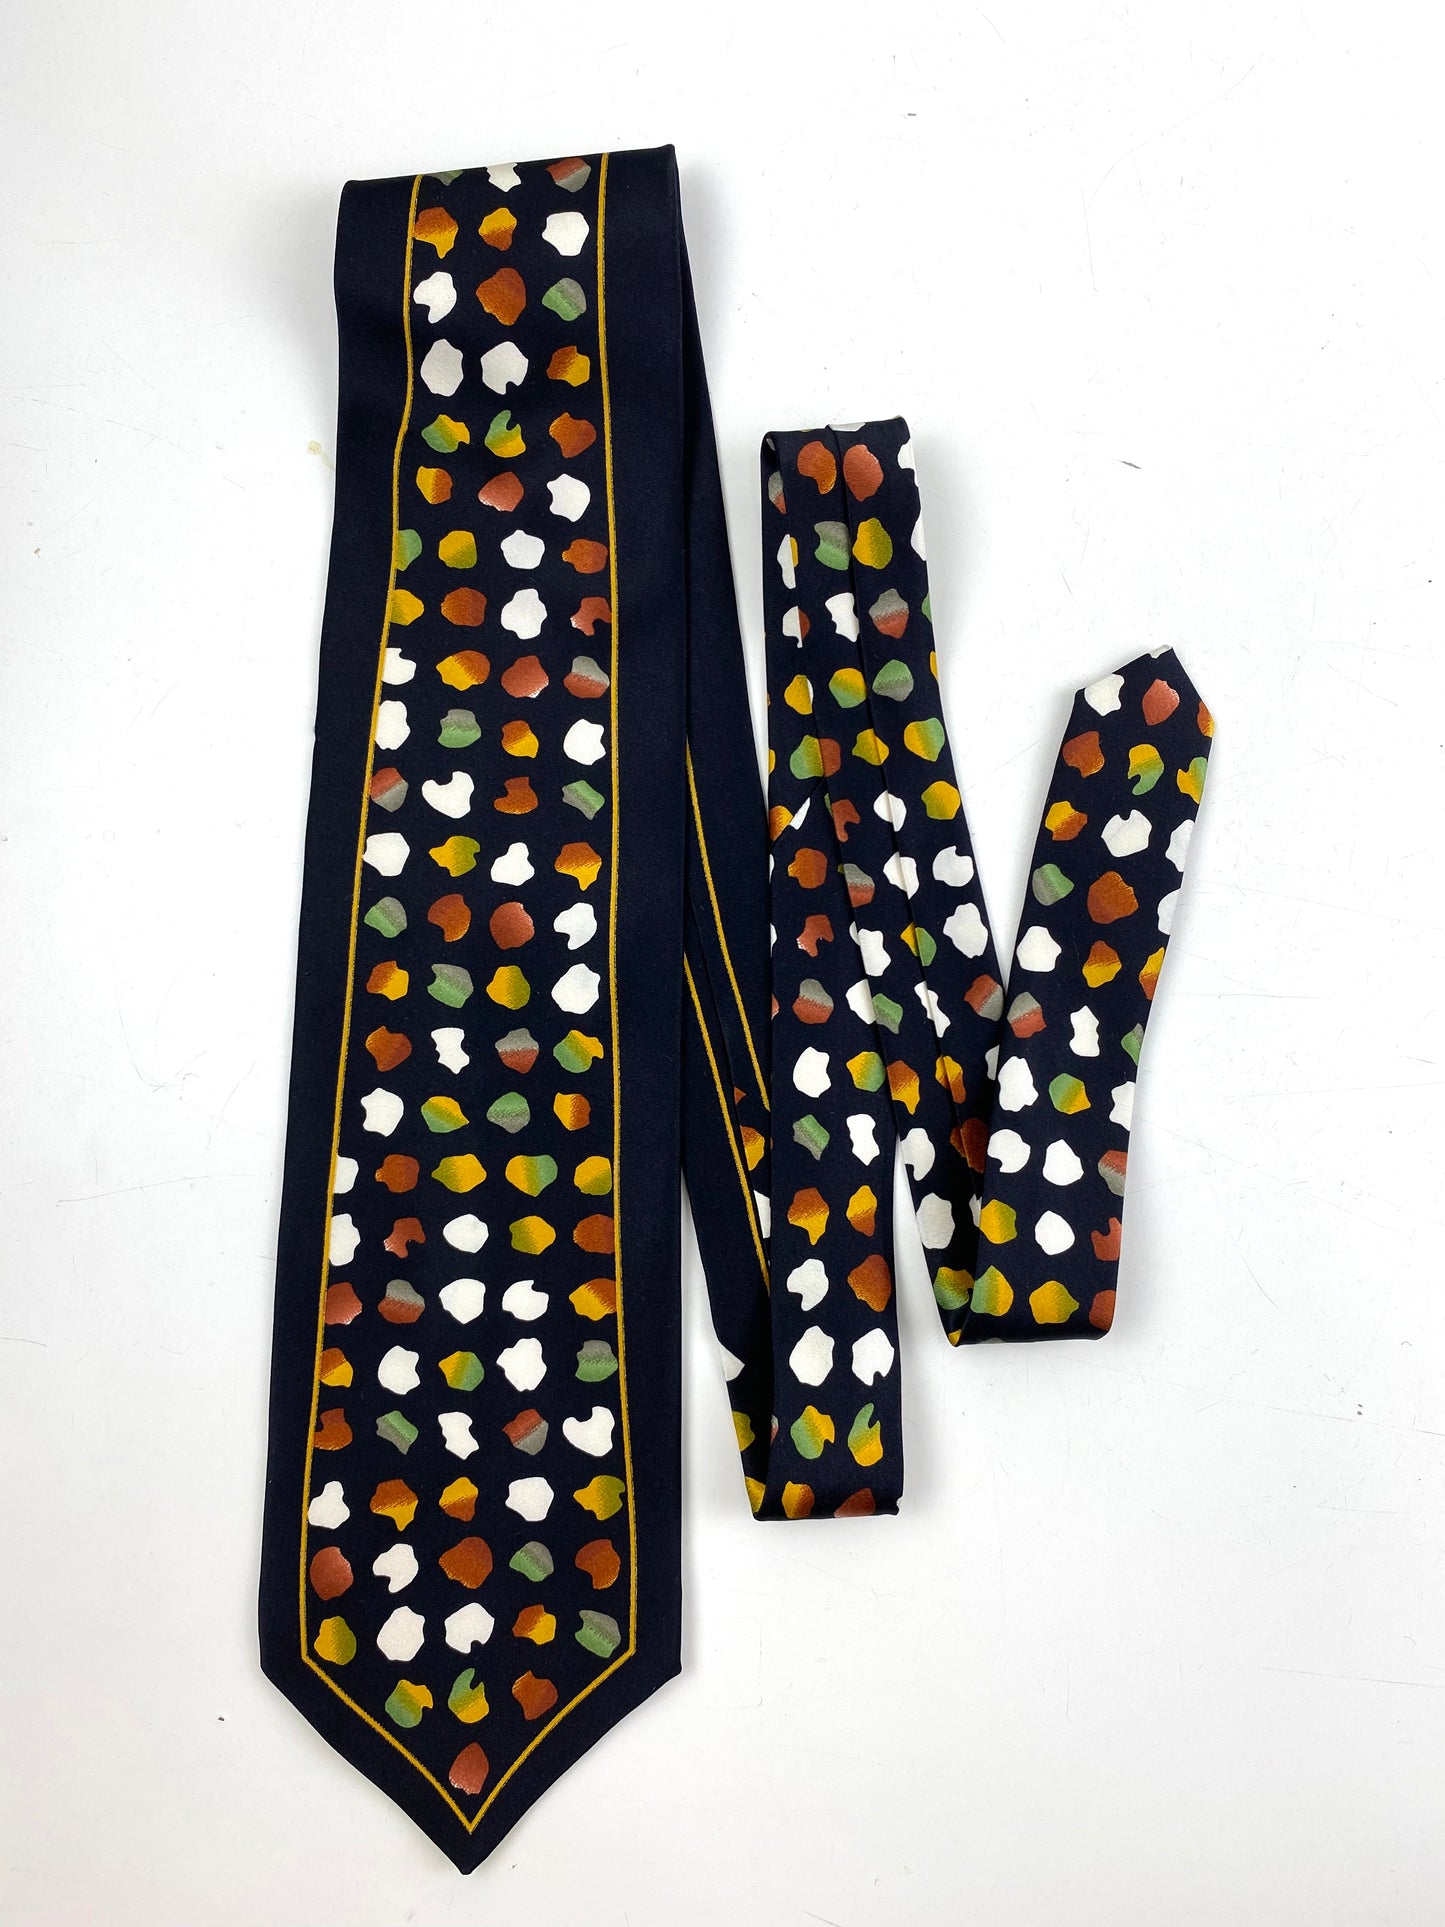 90s Deadstock Silk Necktie, Men's Vintage Black/ Rusty Brown/ Yellow Abstract Blot Pattern Tie, NOS